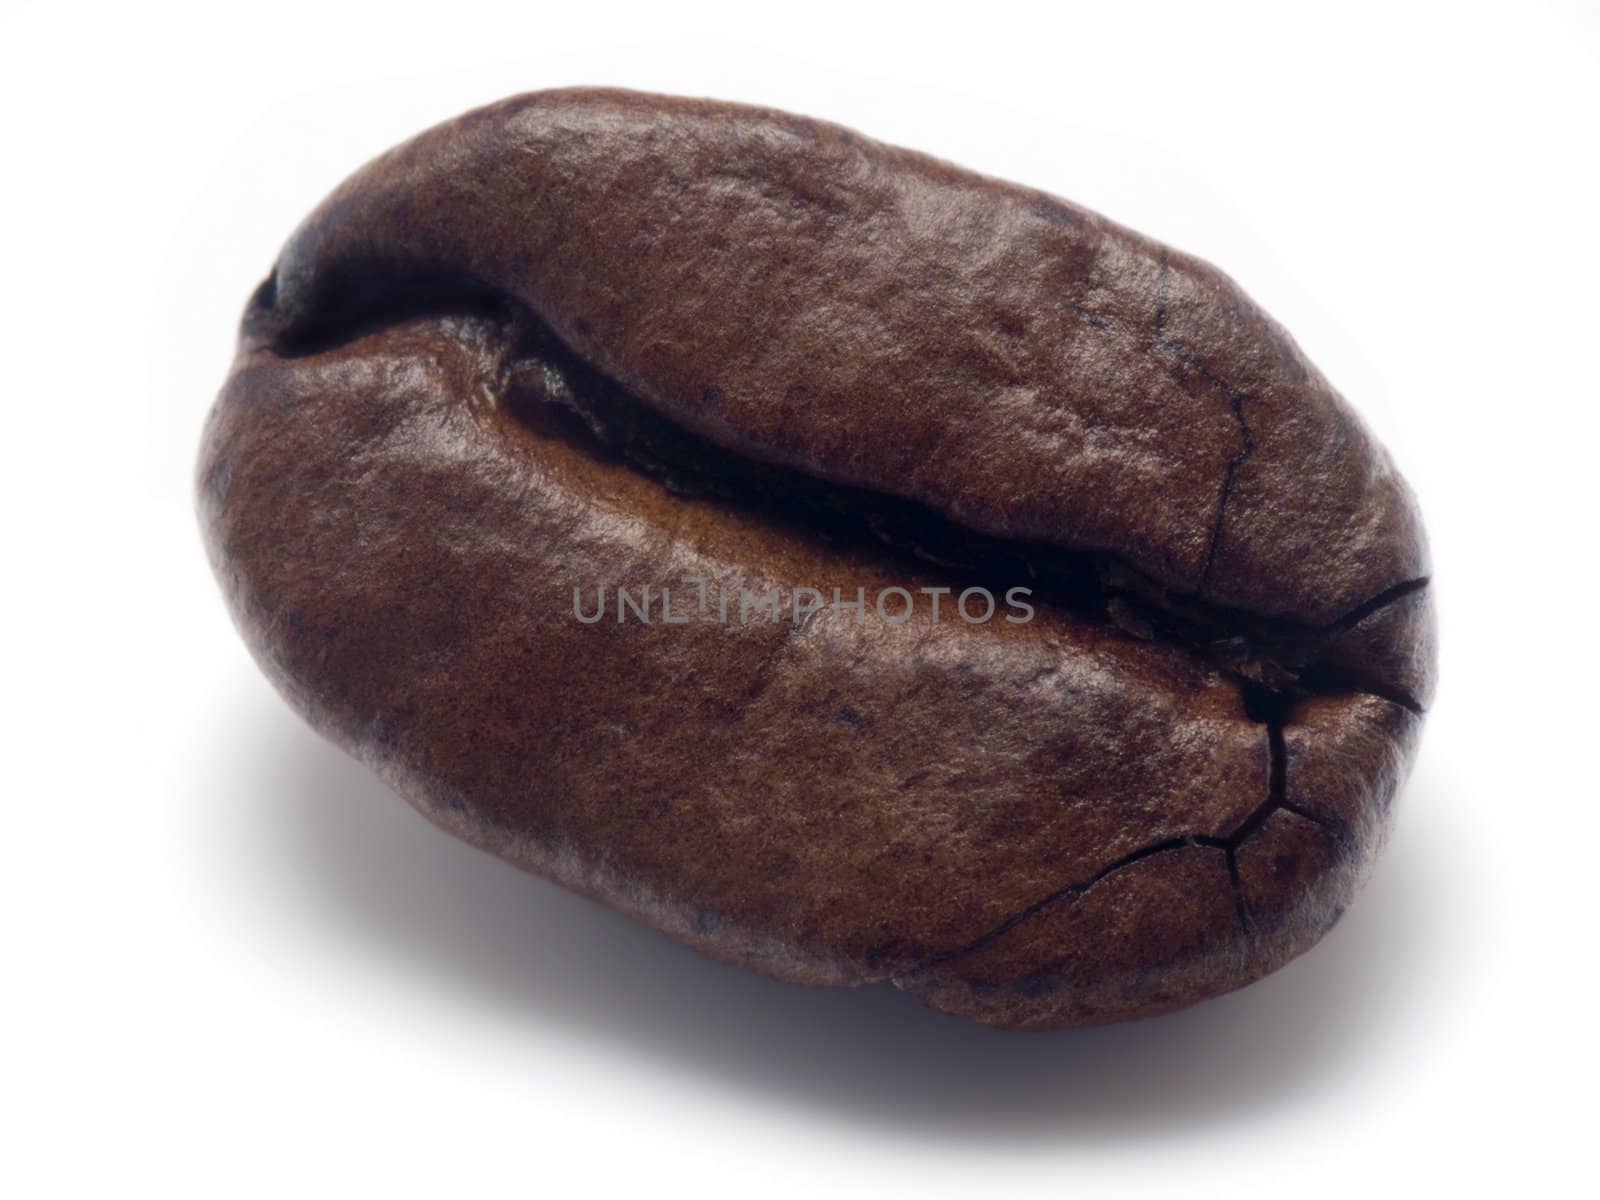 Closeup of a single coffee bean